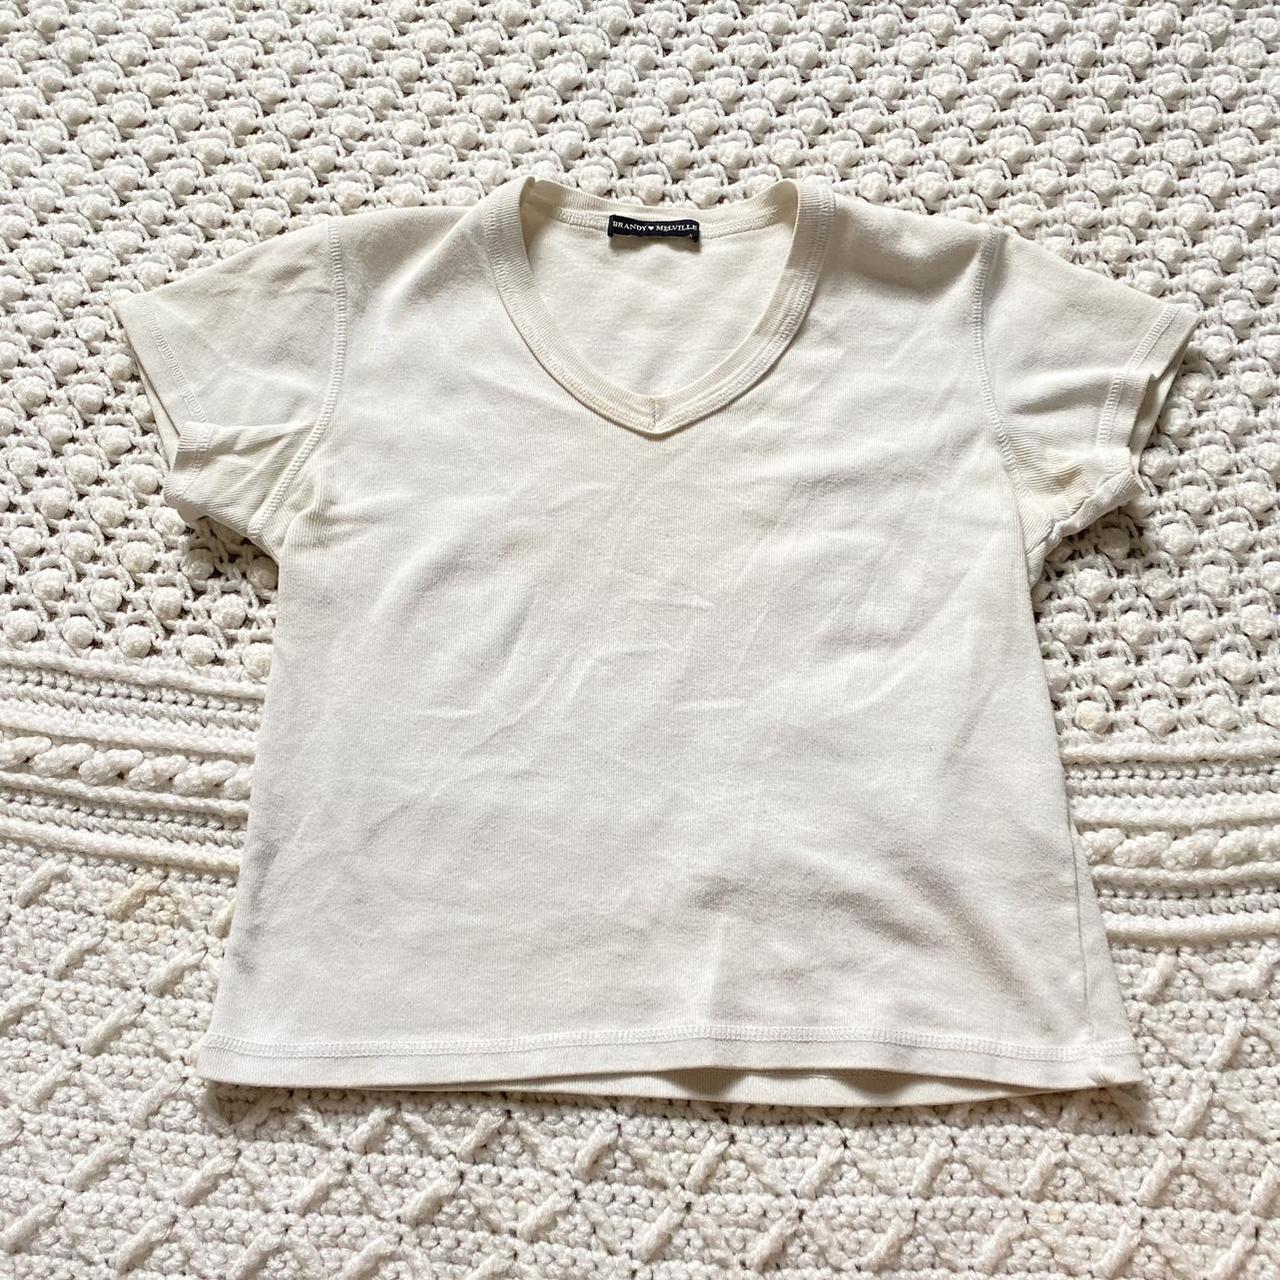 Brandy Melville White Tank Top Shirt Cotton Breezy High Neck Made